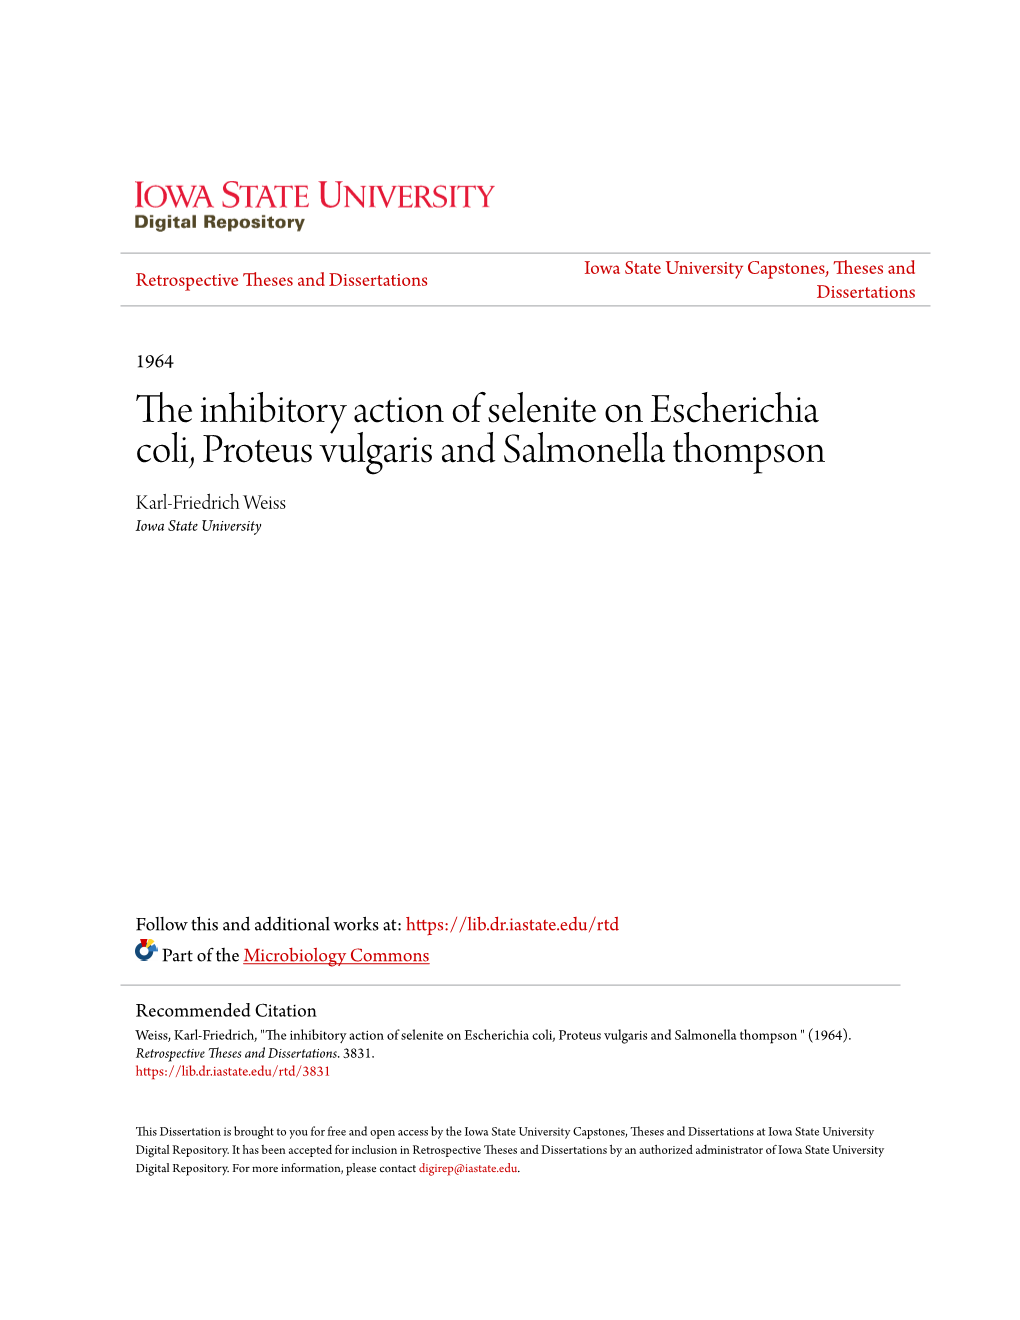 The Inhibitory Action of Selenite on Escherichia Coli, Proteus Vulgaris and Salmonella Thompson Karl-Friedrich Weiss Iowa State University